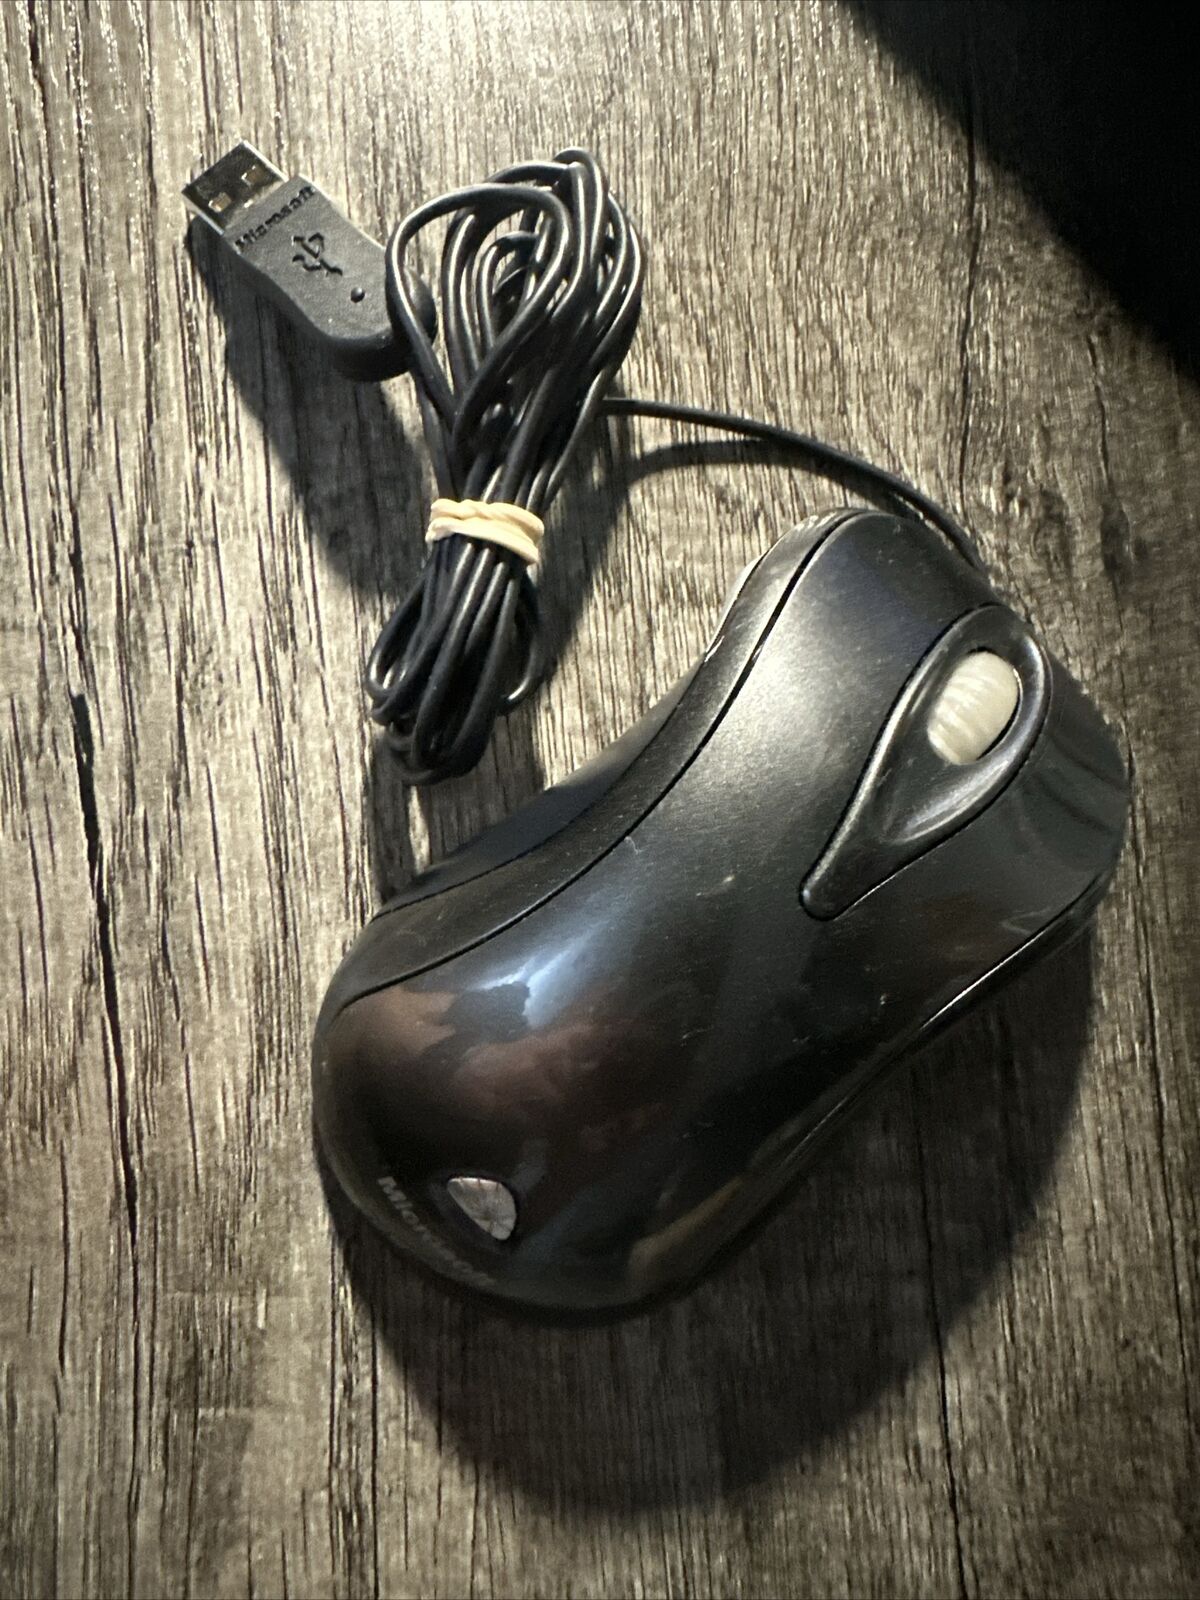 Vintage Microsoft Laser Mouse 6000 v1.0 Model 1055 USB Wired - VG Condition